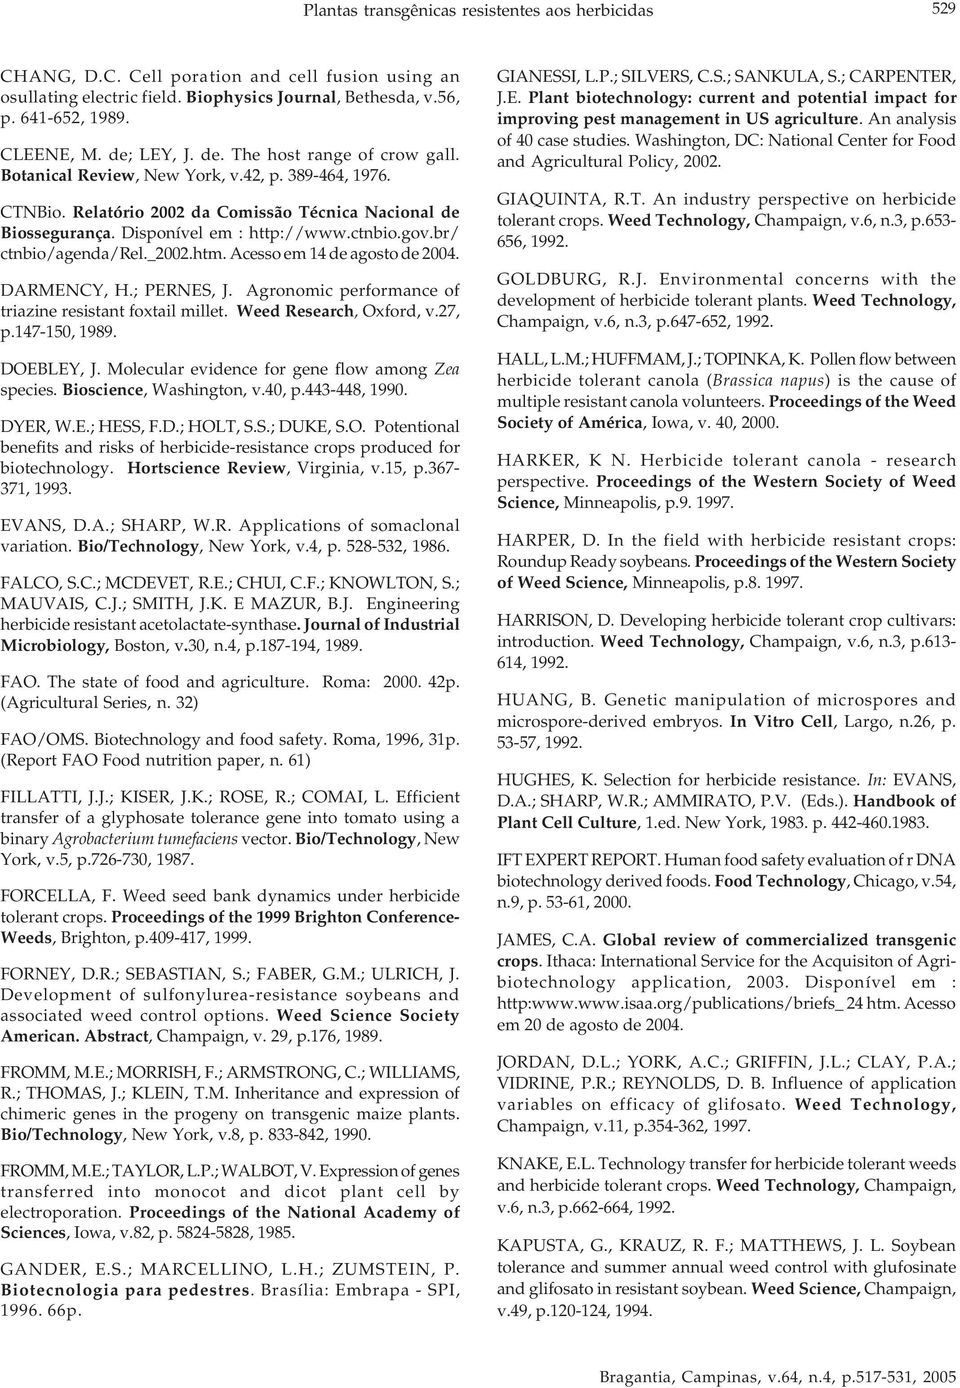 ctnbio.gov.br/ ctnbio/agenda/rel._2002.htm. Acesso em 14 de agosto de 2004. DARMENCY, H.; PERNES, J. Agronomic performance of triazine resistant foxtail millet. Weed Research, Oxford, v.27, p.